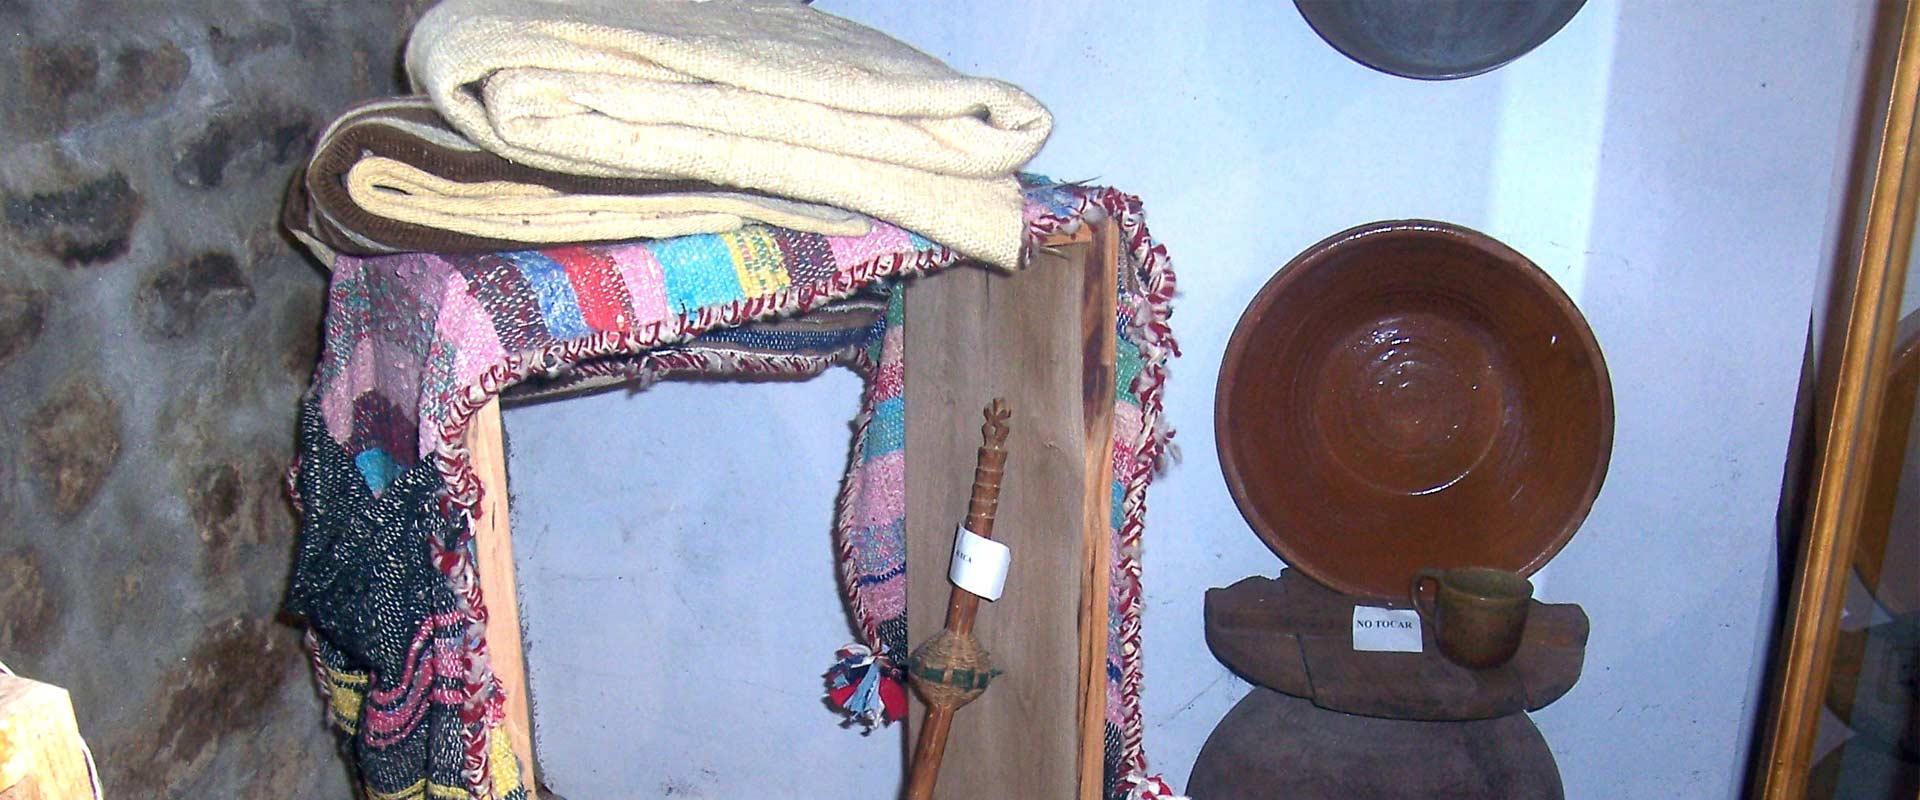 Linen ethnographic museum in Peñaparda